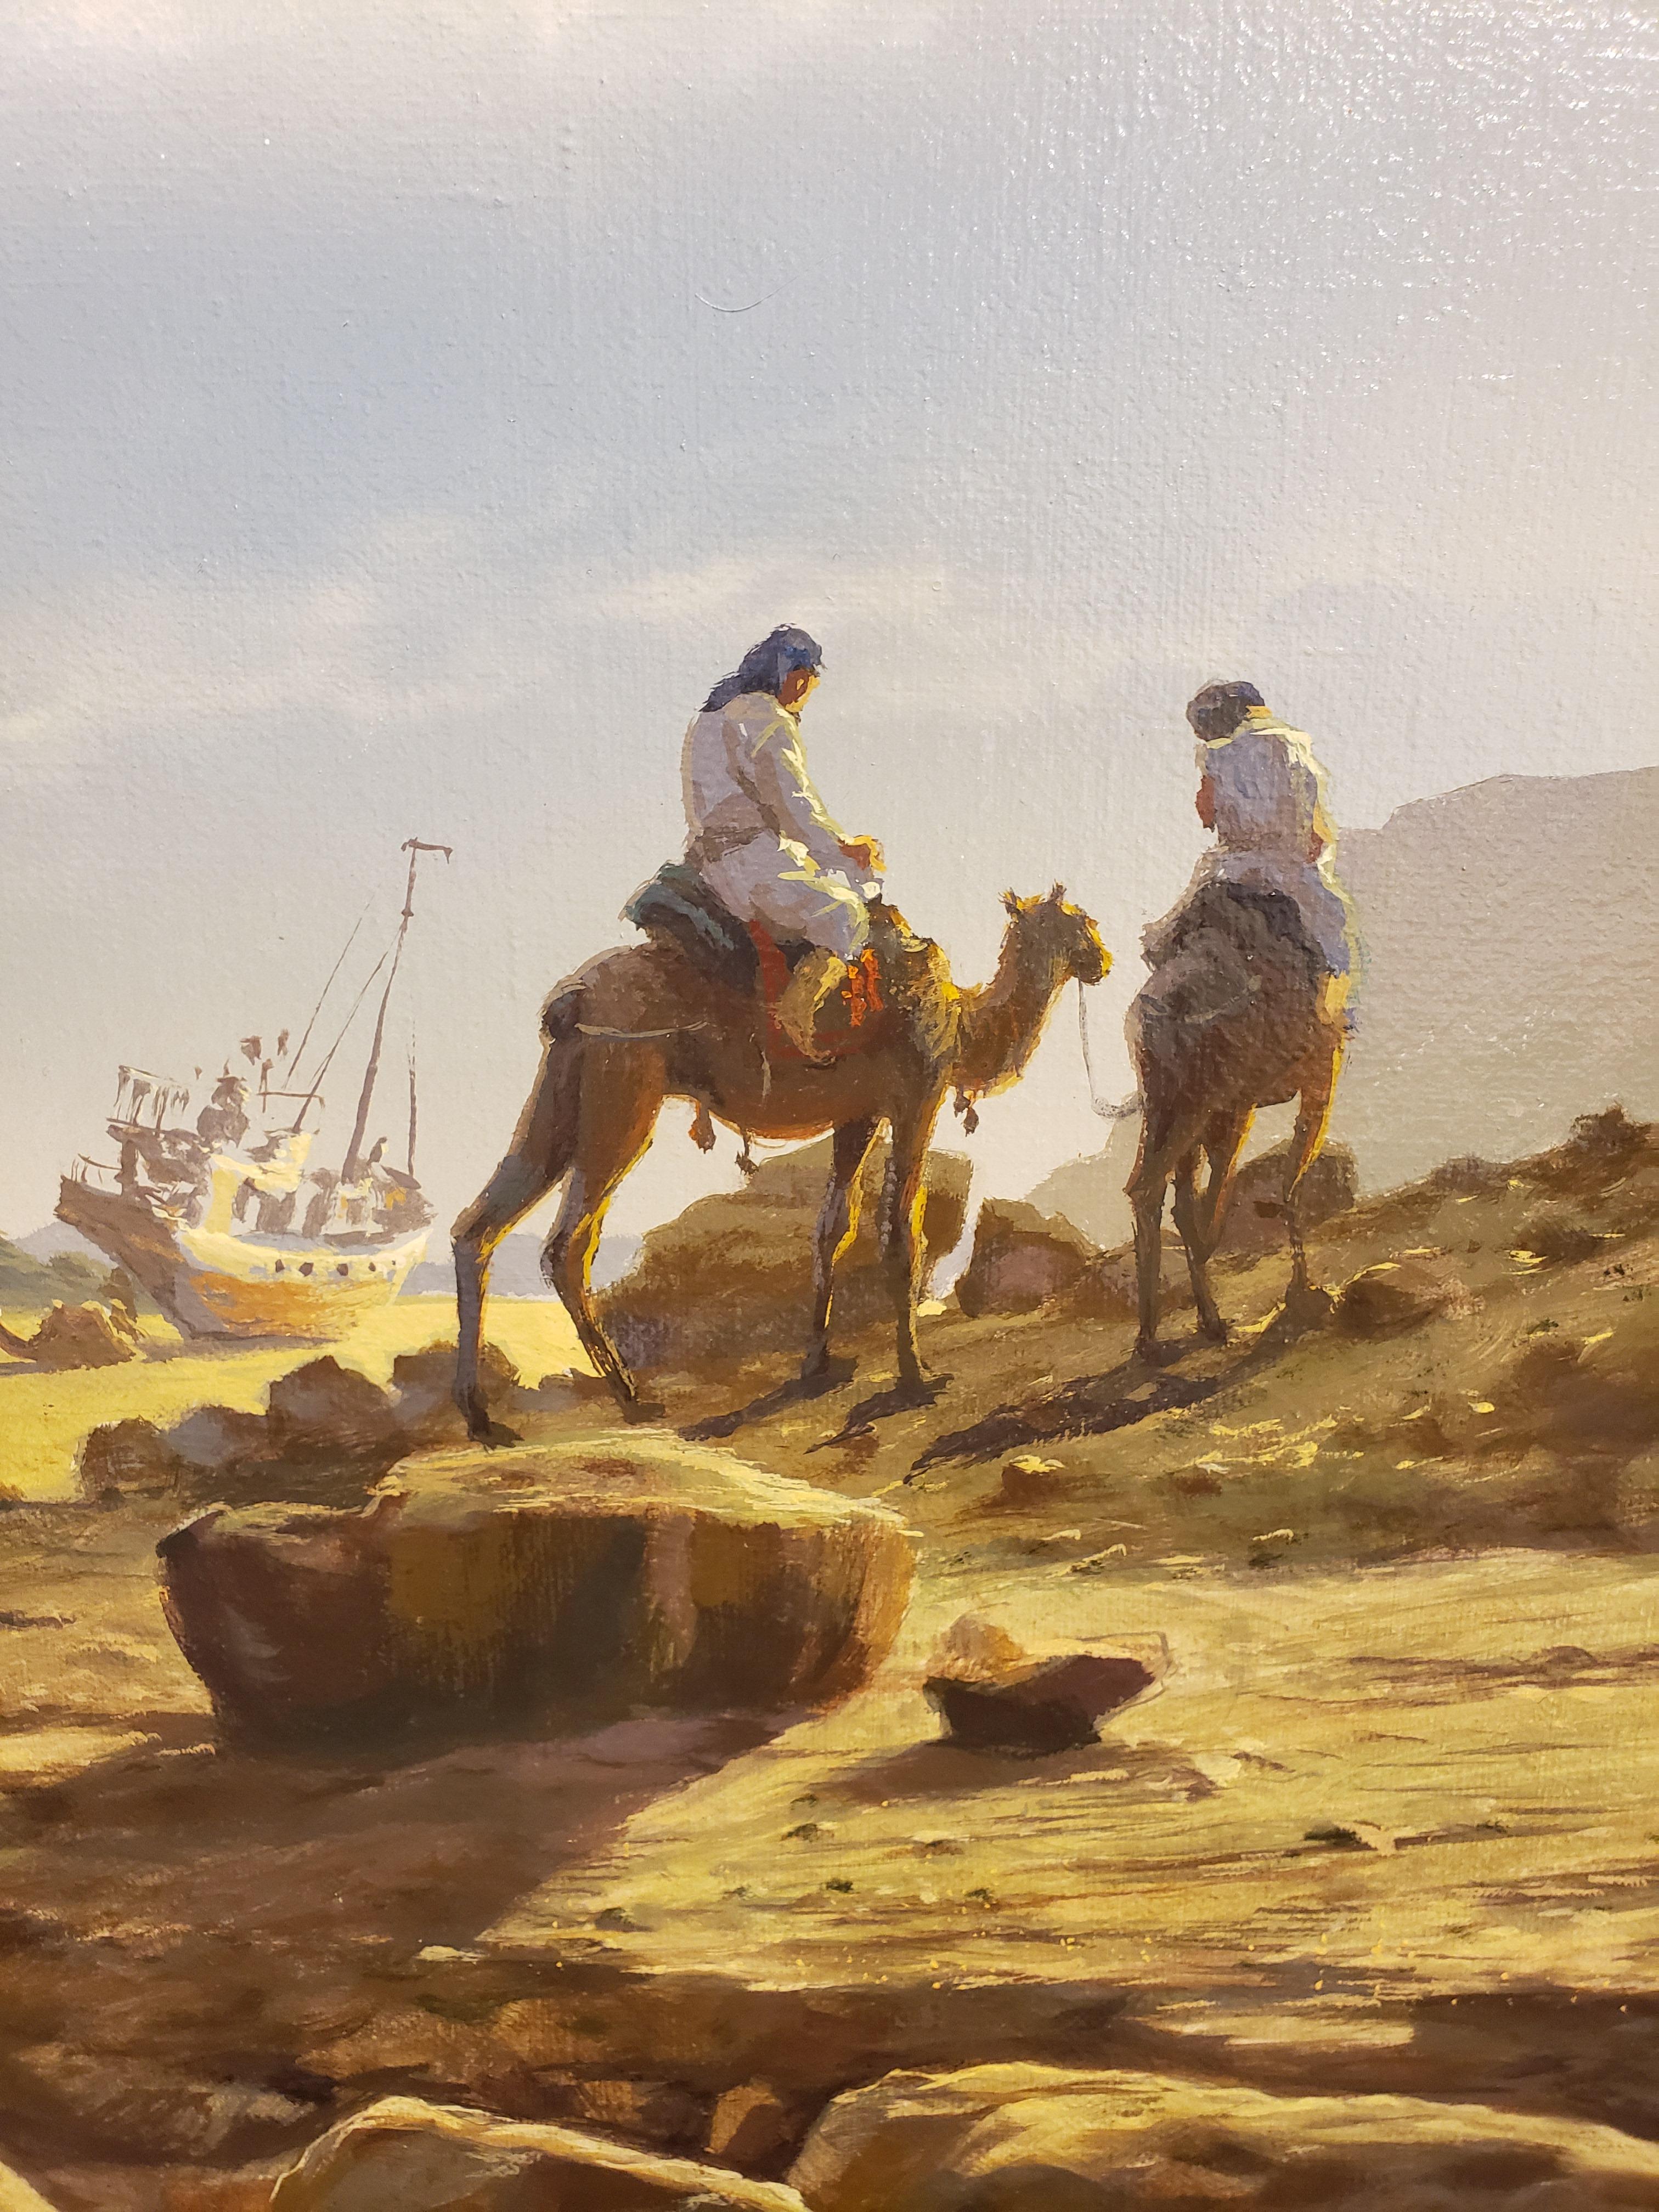 Desert Ship - Painting by Stanislav Plutenko